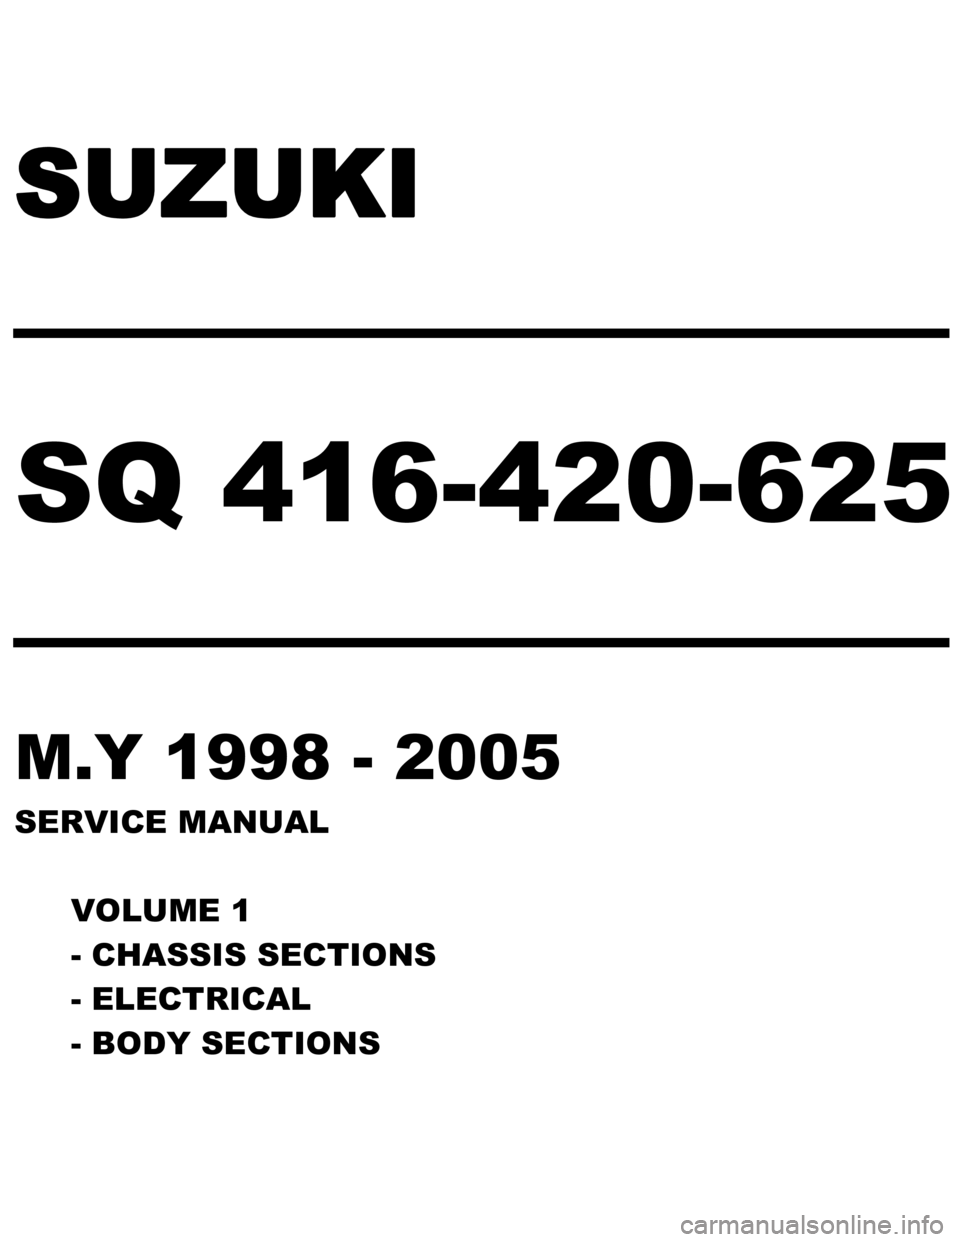 SUZUKI GRAND VITARA 2003 2.G Service Workshop Manual 
SUZUKI  
──────────── 
SQ 416-420-625 
──────────── 
M.Y 1998 - 2005 
SERVICE MANUAL   
VOLUME 1 
- CHASSIS SECTIONS 
- ELECTRICAL 
- BODY SECTIONS  